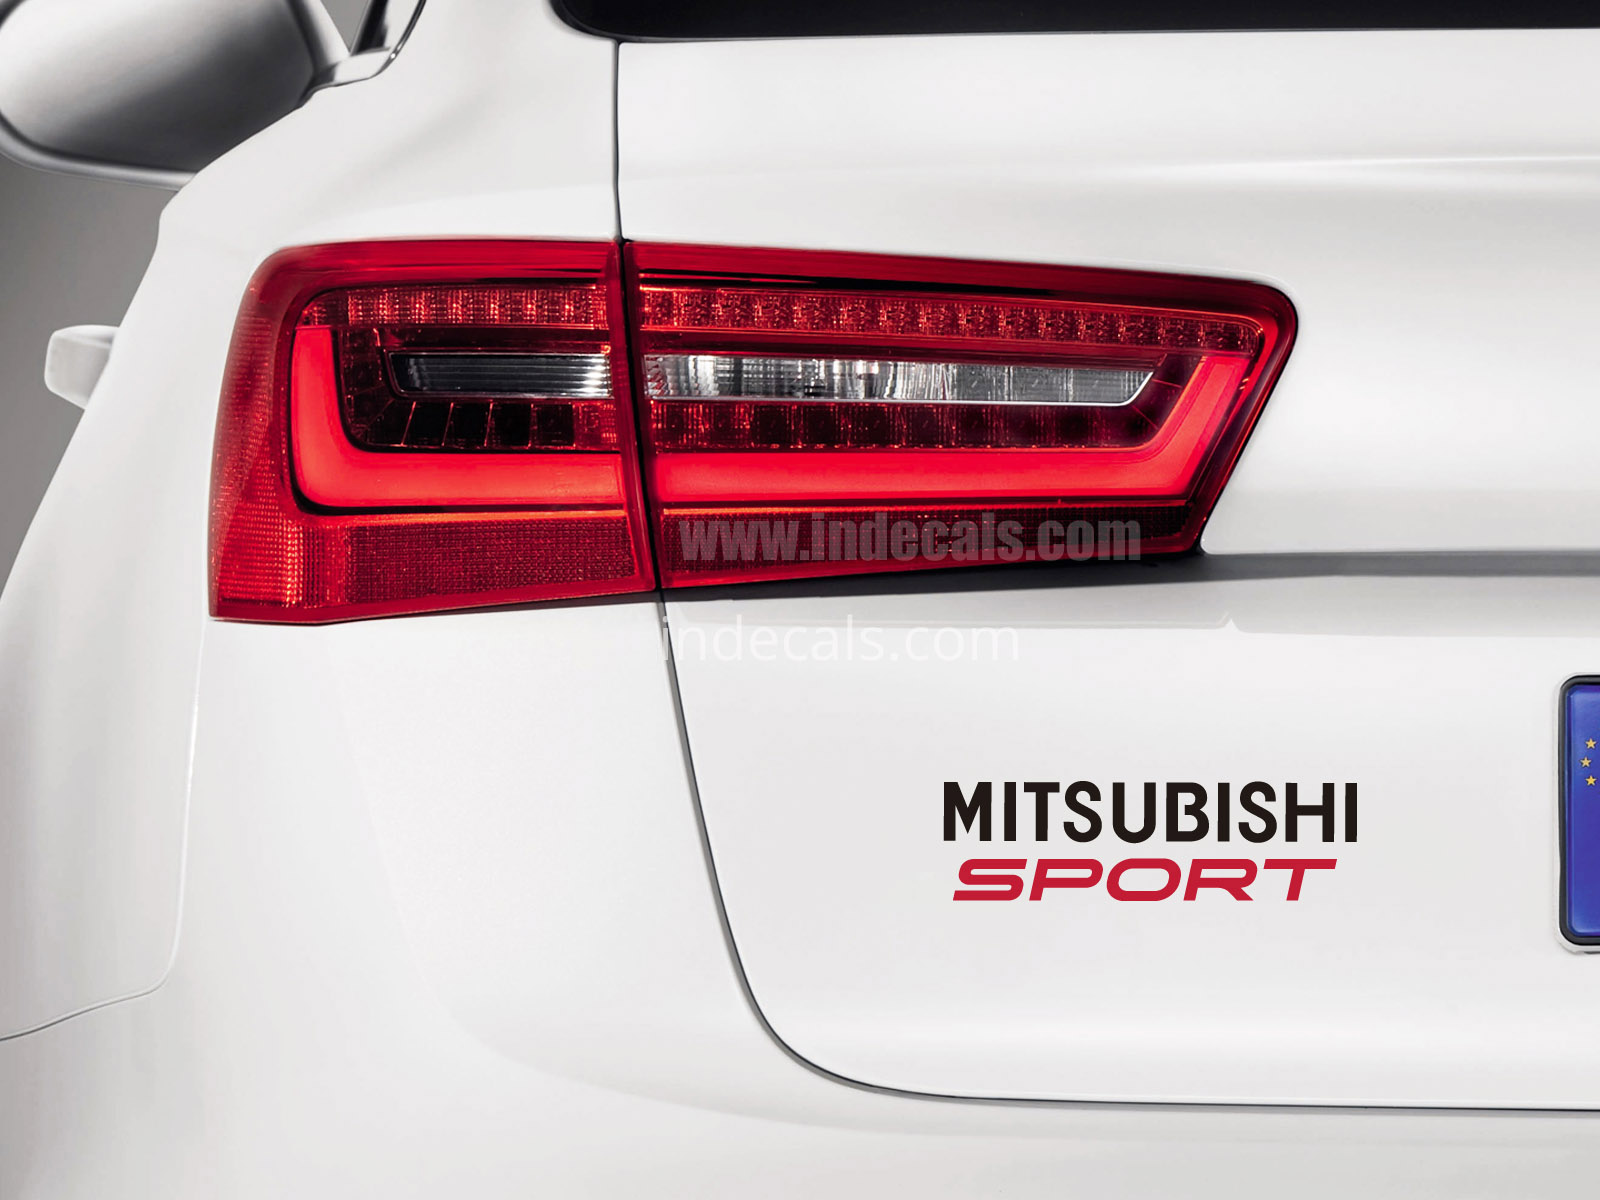 1 x Mitsubishi Sports Sticker for Trunk - Black & Red